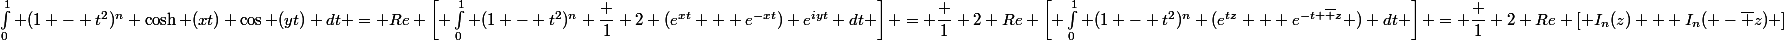 \int_0^1 (1 - t^2)^n \cosh (xt) \cos (yt) dt = Re \left[ \int_0^1 (1 - t^2)^n \dfrac 1 2 (e^{xt} + e^{-xt}) e^{iyt} dt \right] = \dfrac 1 2 Re \left[ \int_0^1 (1 - t^2)^n (e^{tz} + e^{-t \bar z} ) dt \right] = \dfrac 1 2 Re \left[ I_n(z) + I_n( -\bar z) \right]